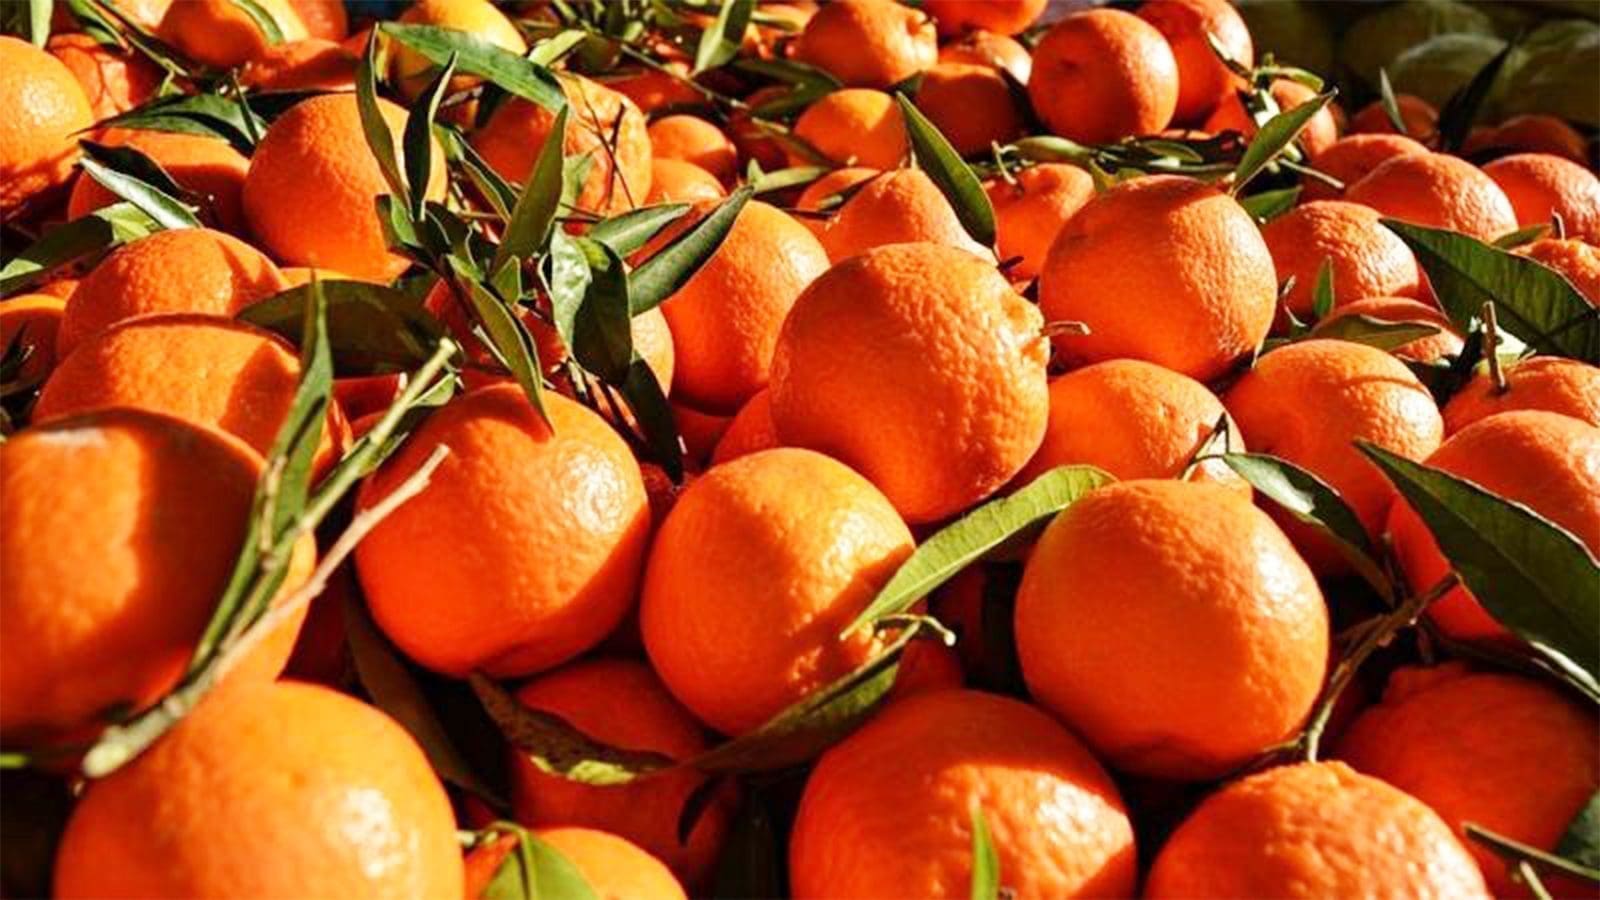 South Africa pauses export of Valencia oranges to EU to curb Citrus Black Spot risk